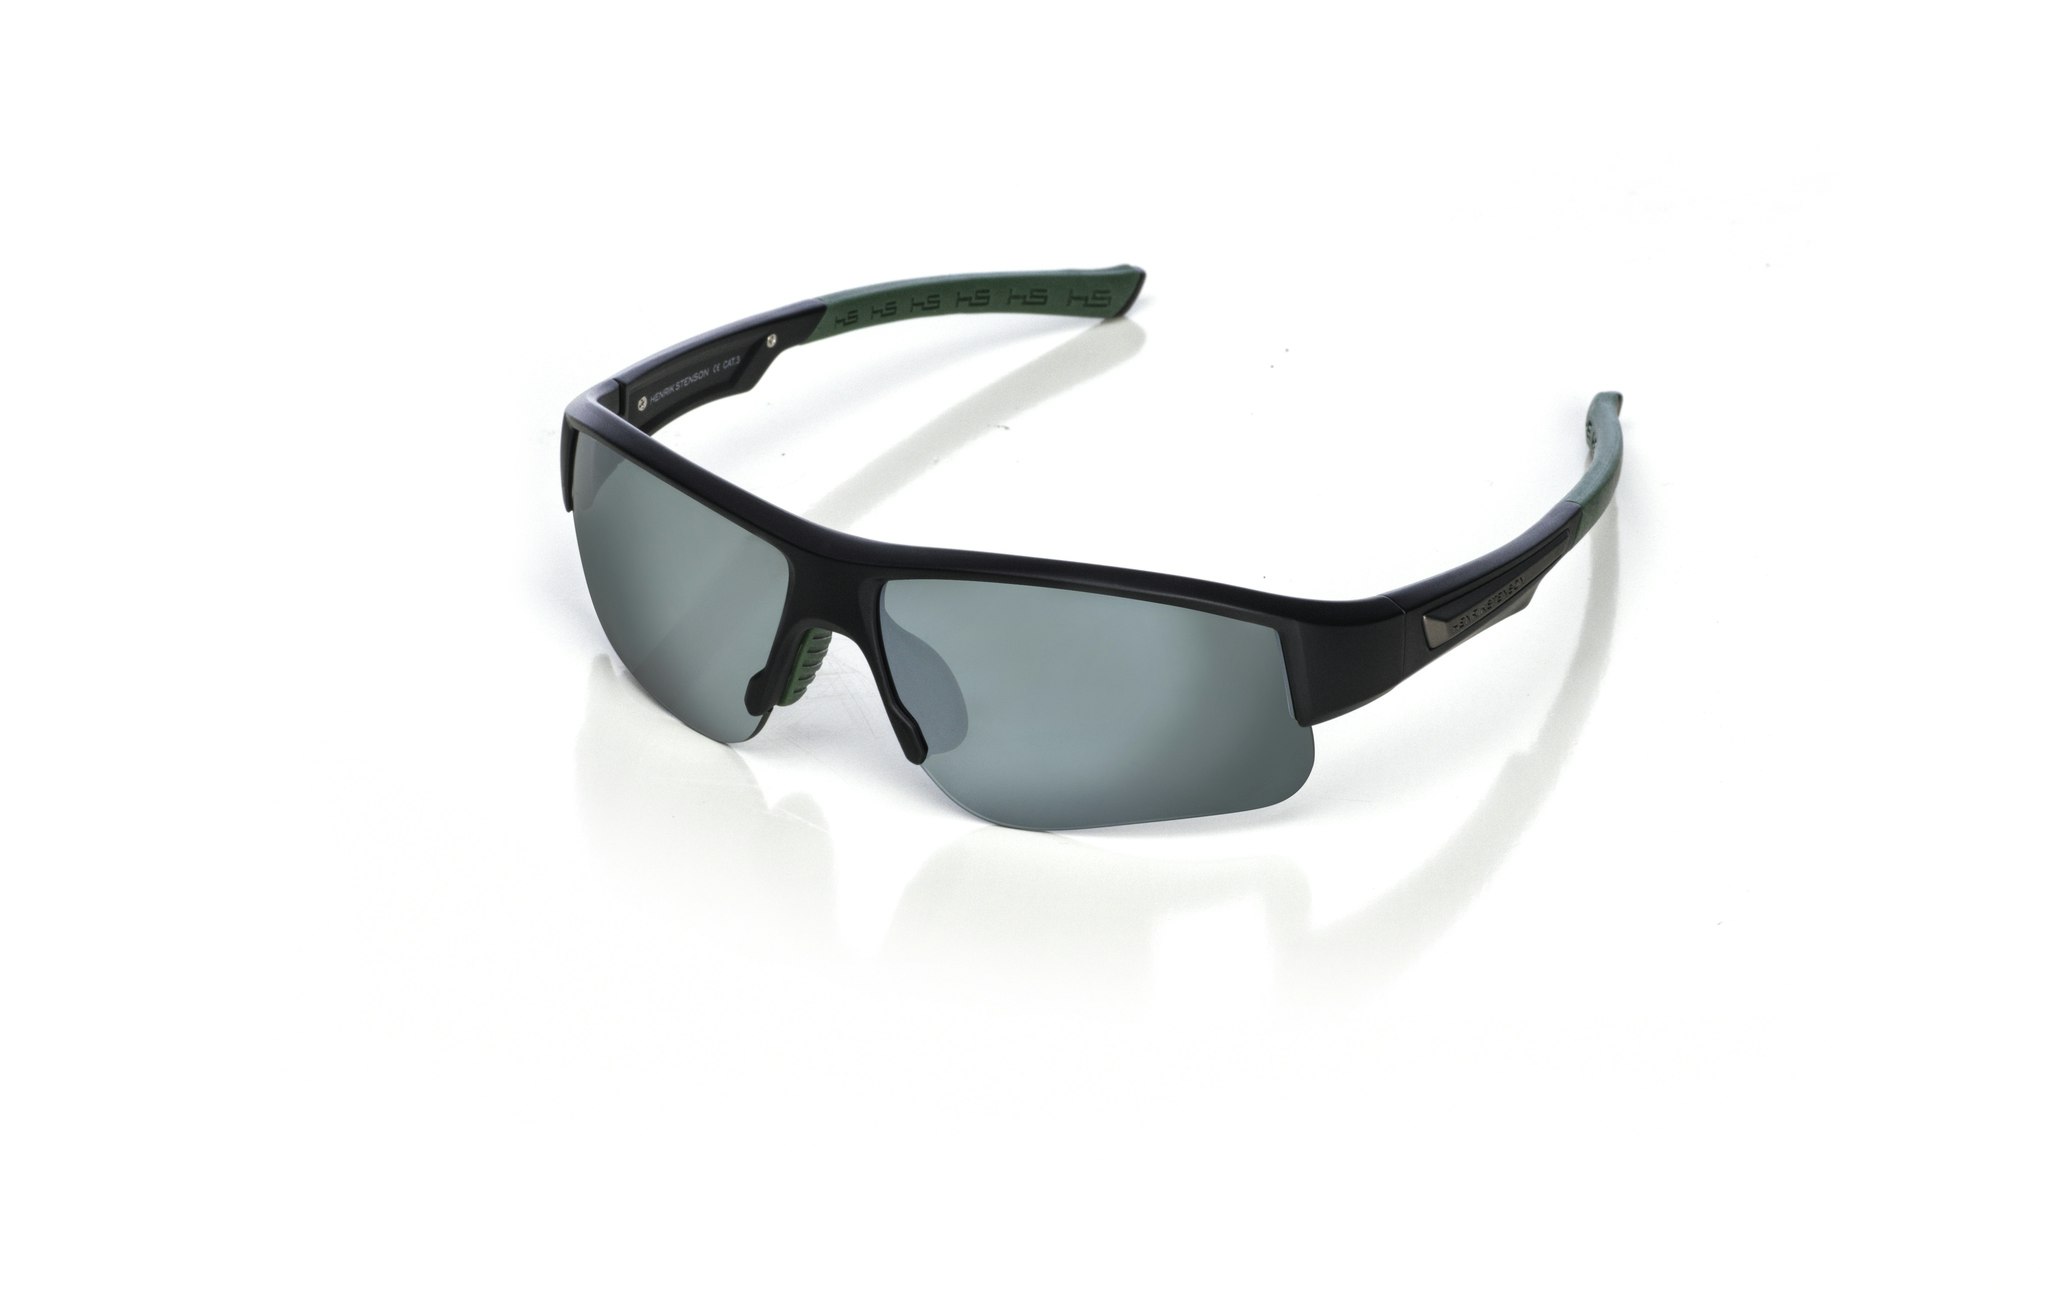 Henrik Stenson Eyewear Stinger 3.0 sportglasögon Black Matte